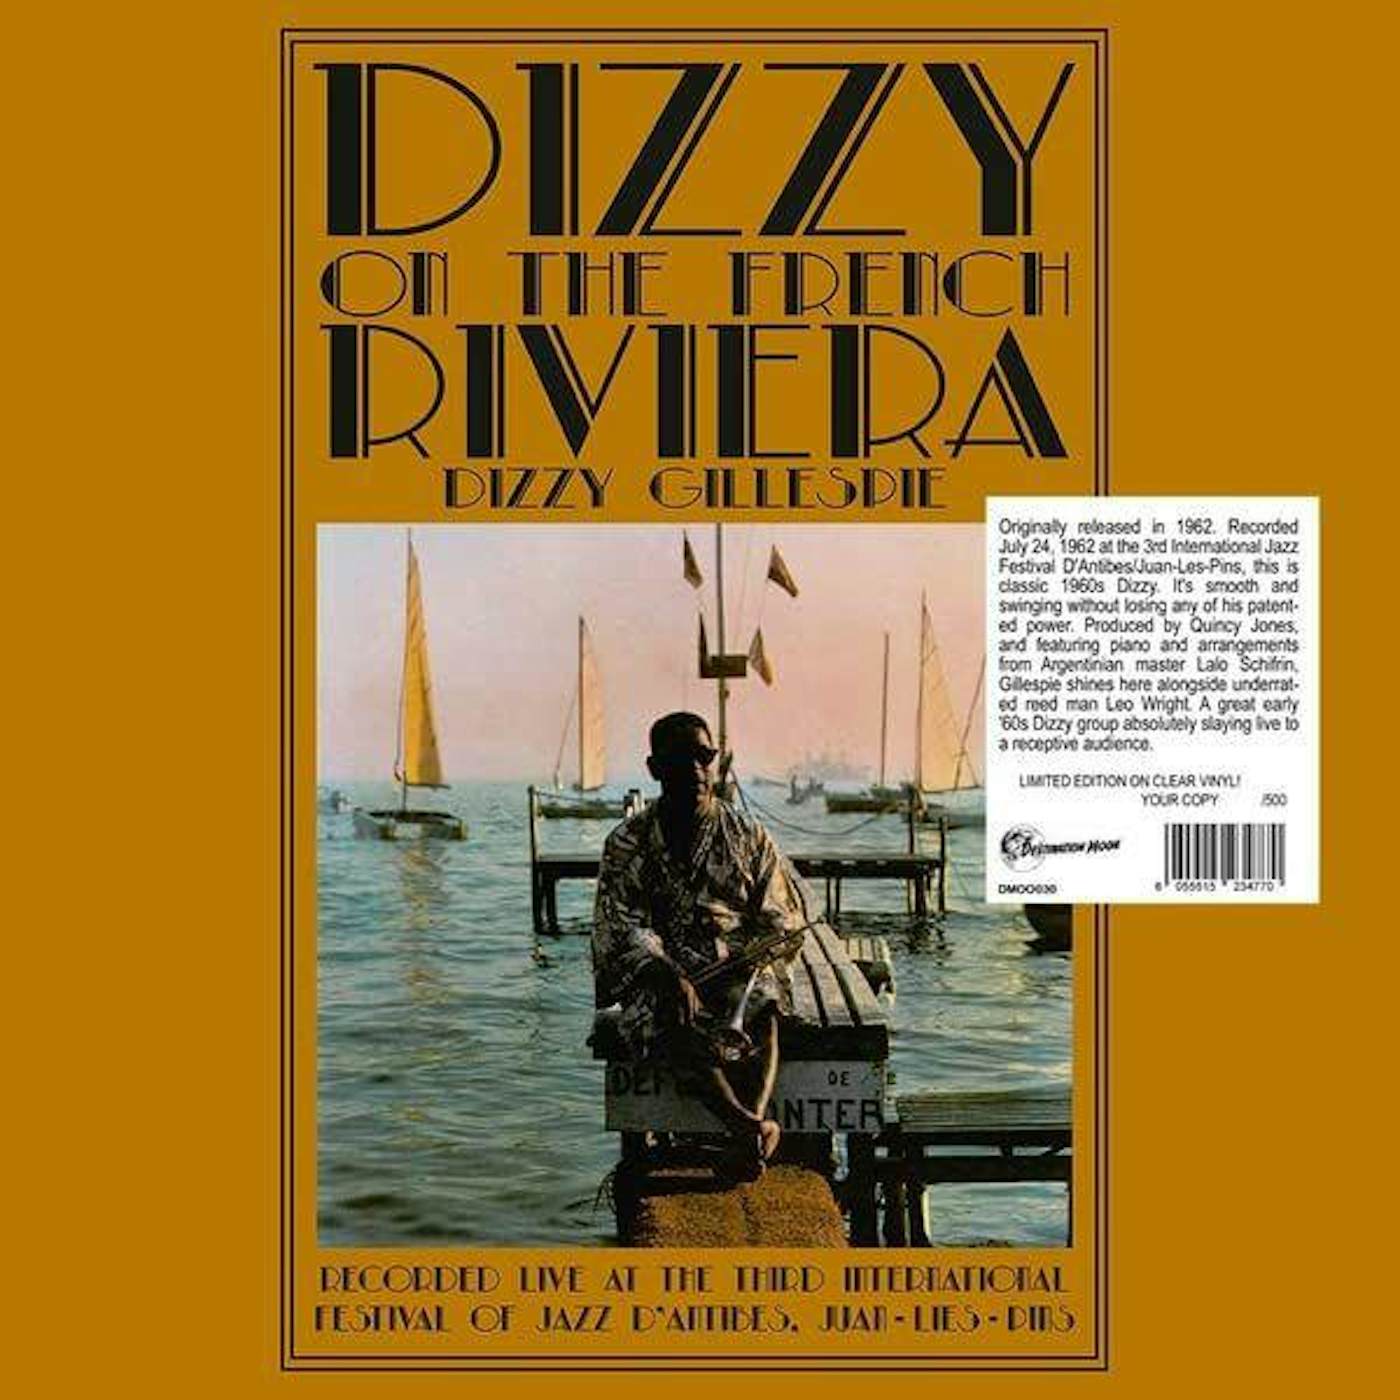 Dizzy Gillespie Dizzy On The French Riviera Vinyl Record